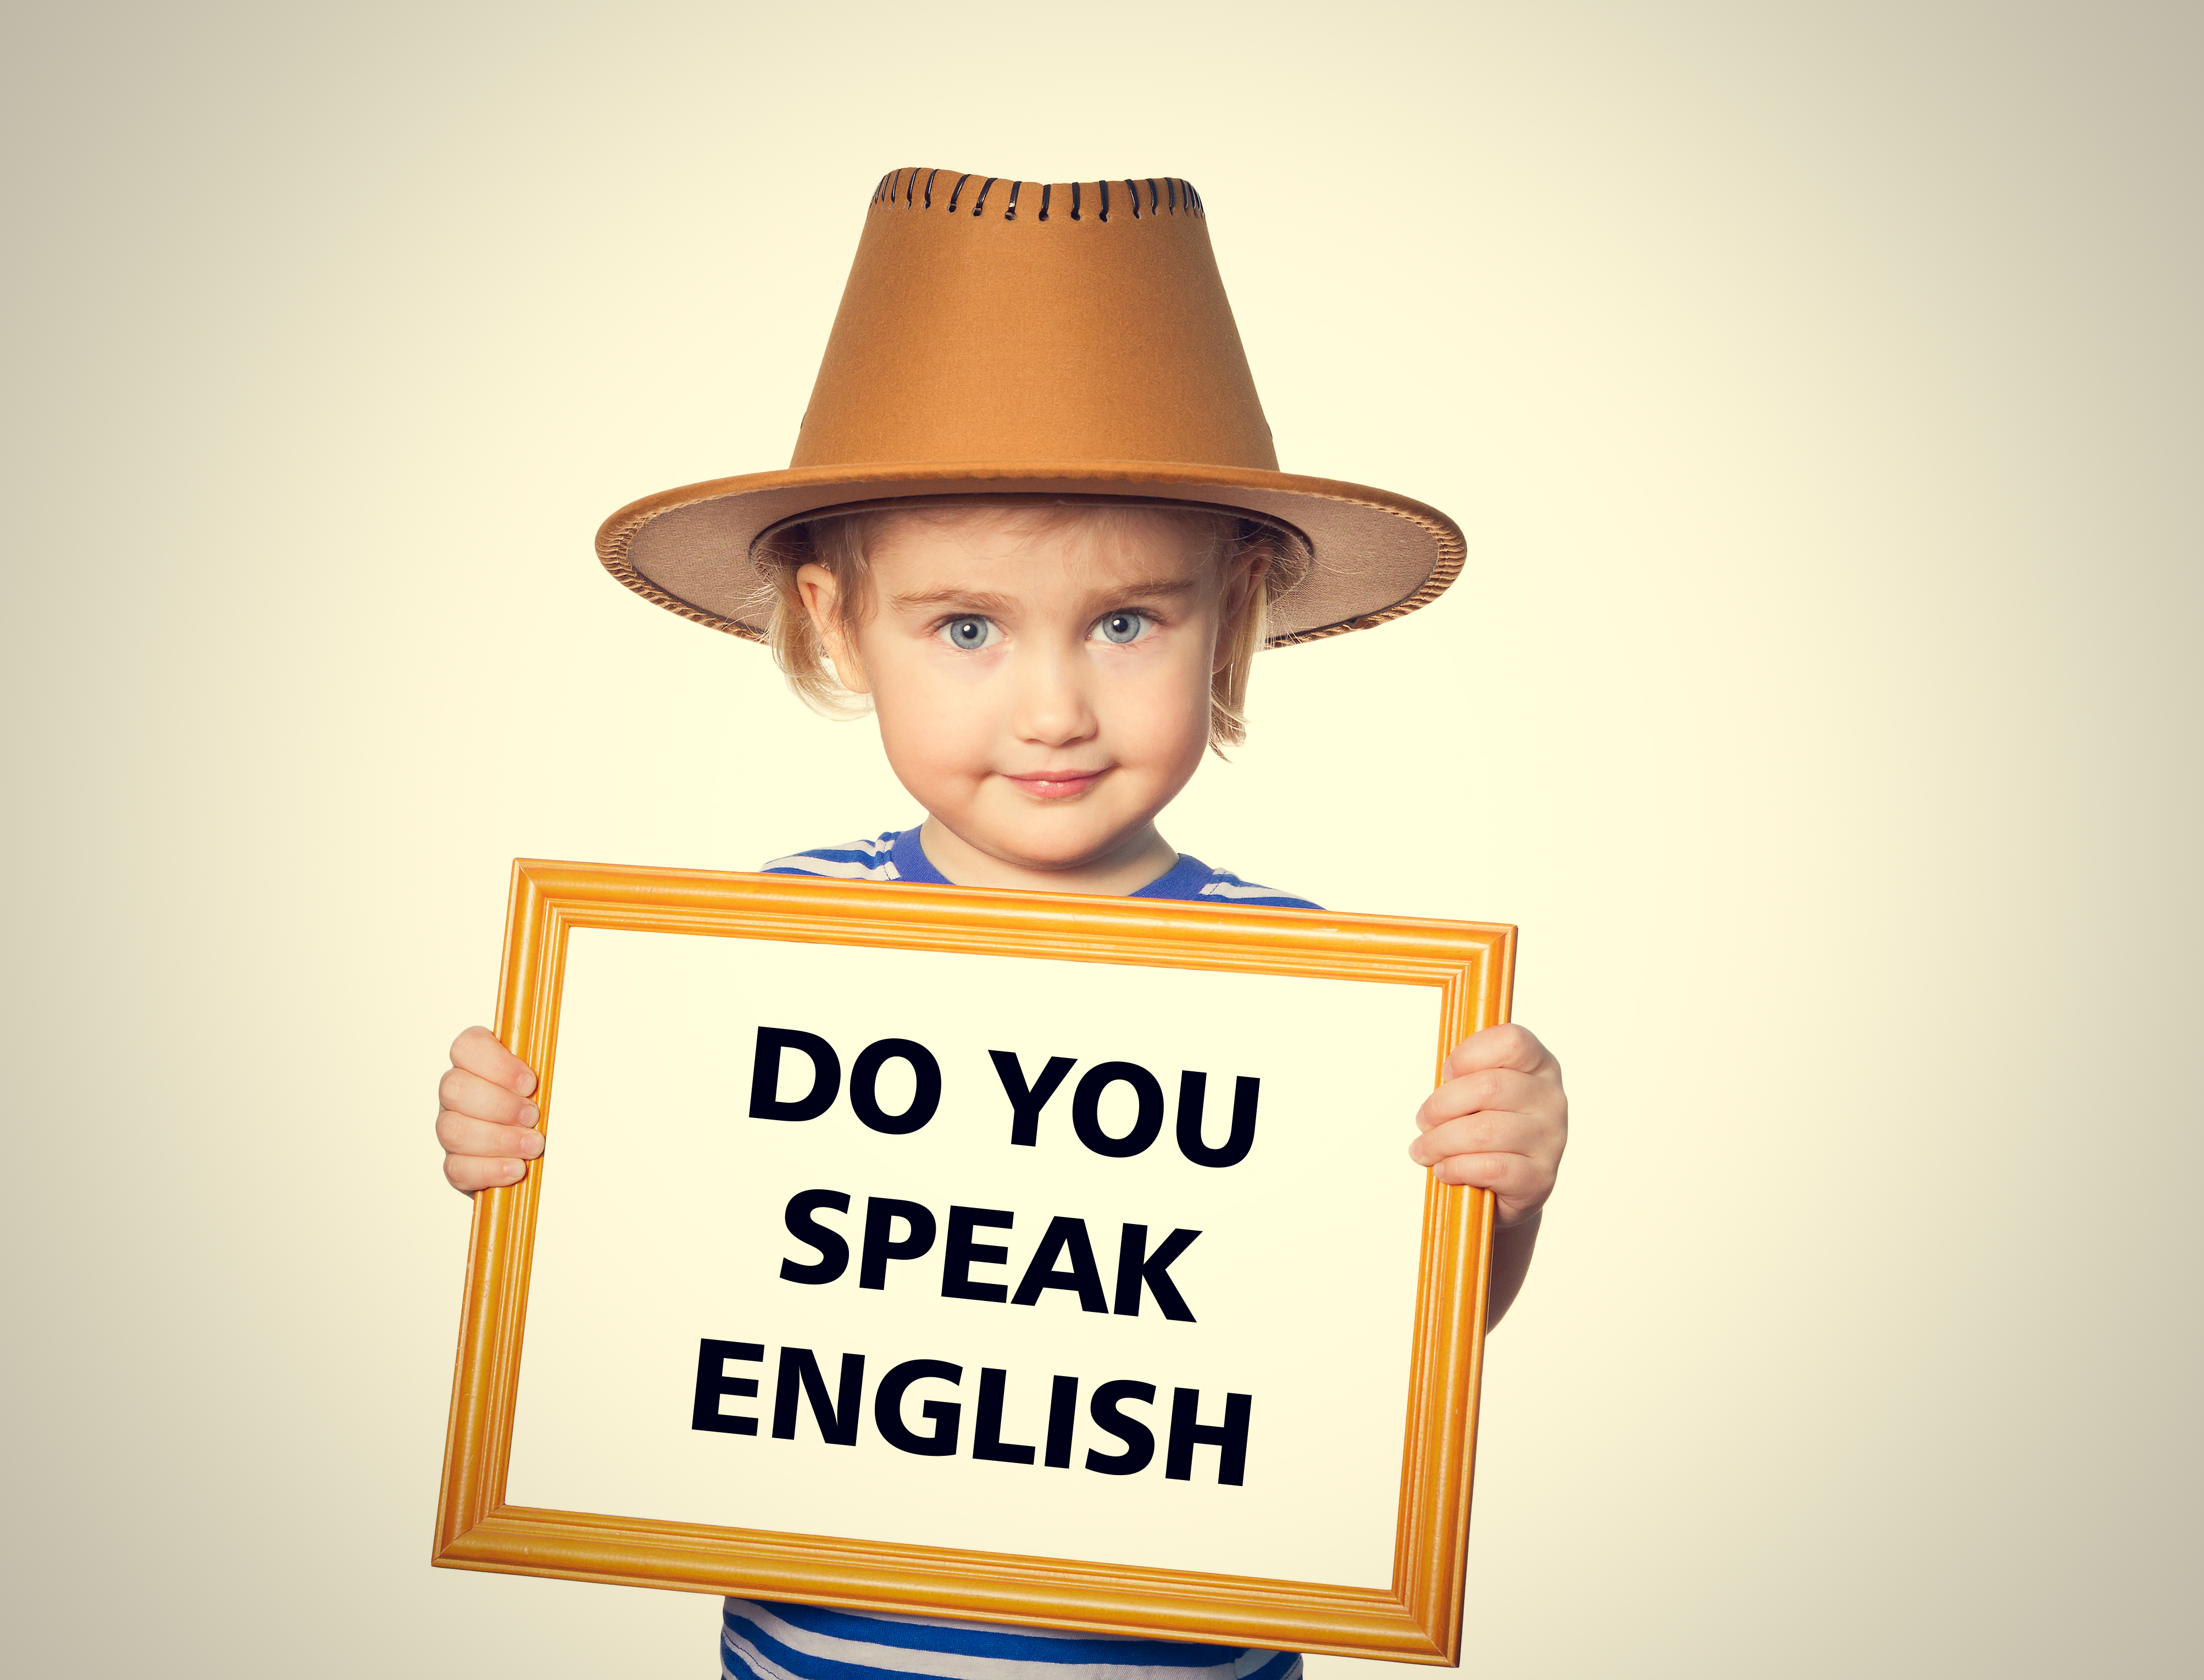 Don t they speak english. Английский язык для детей. Speak English фото. Ребенок говорит на английском. Дети учат английский.